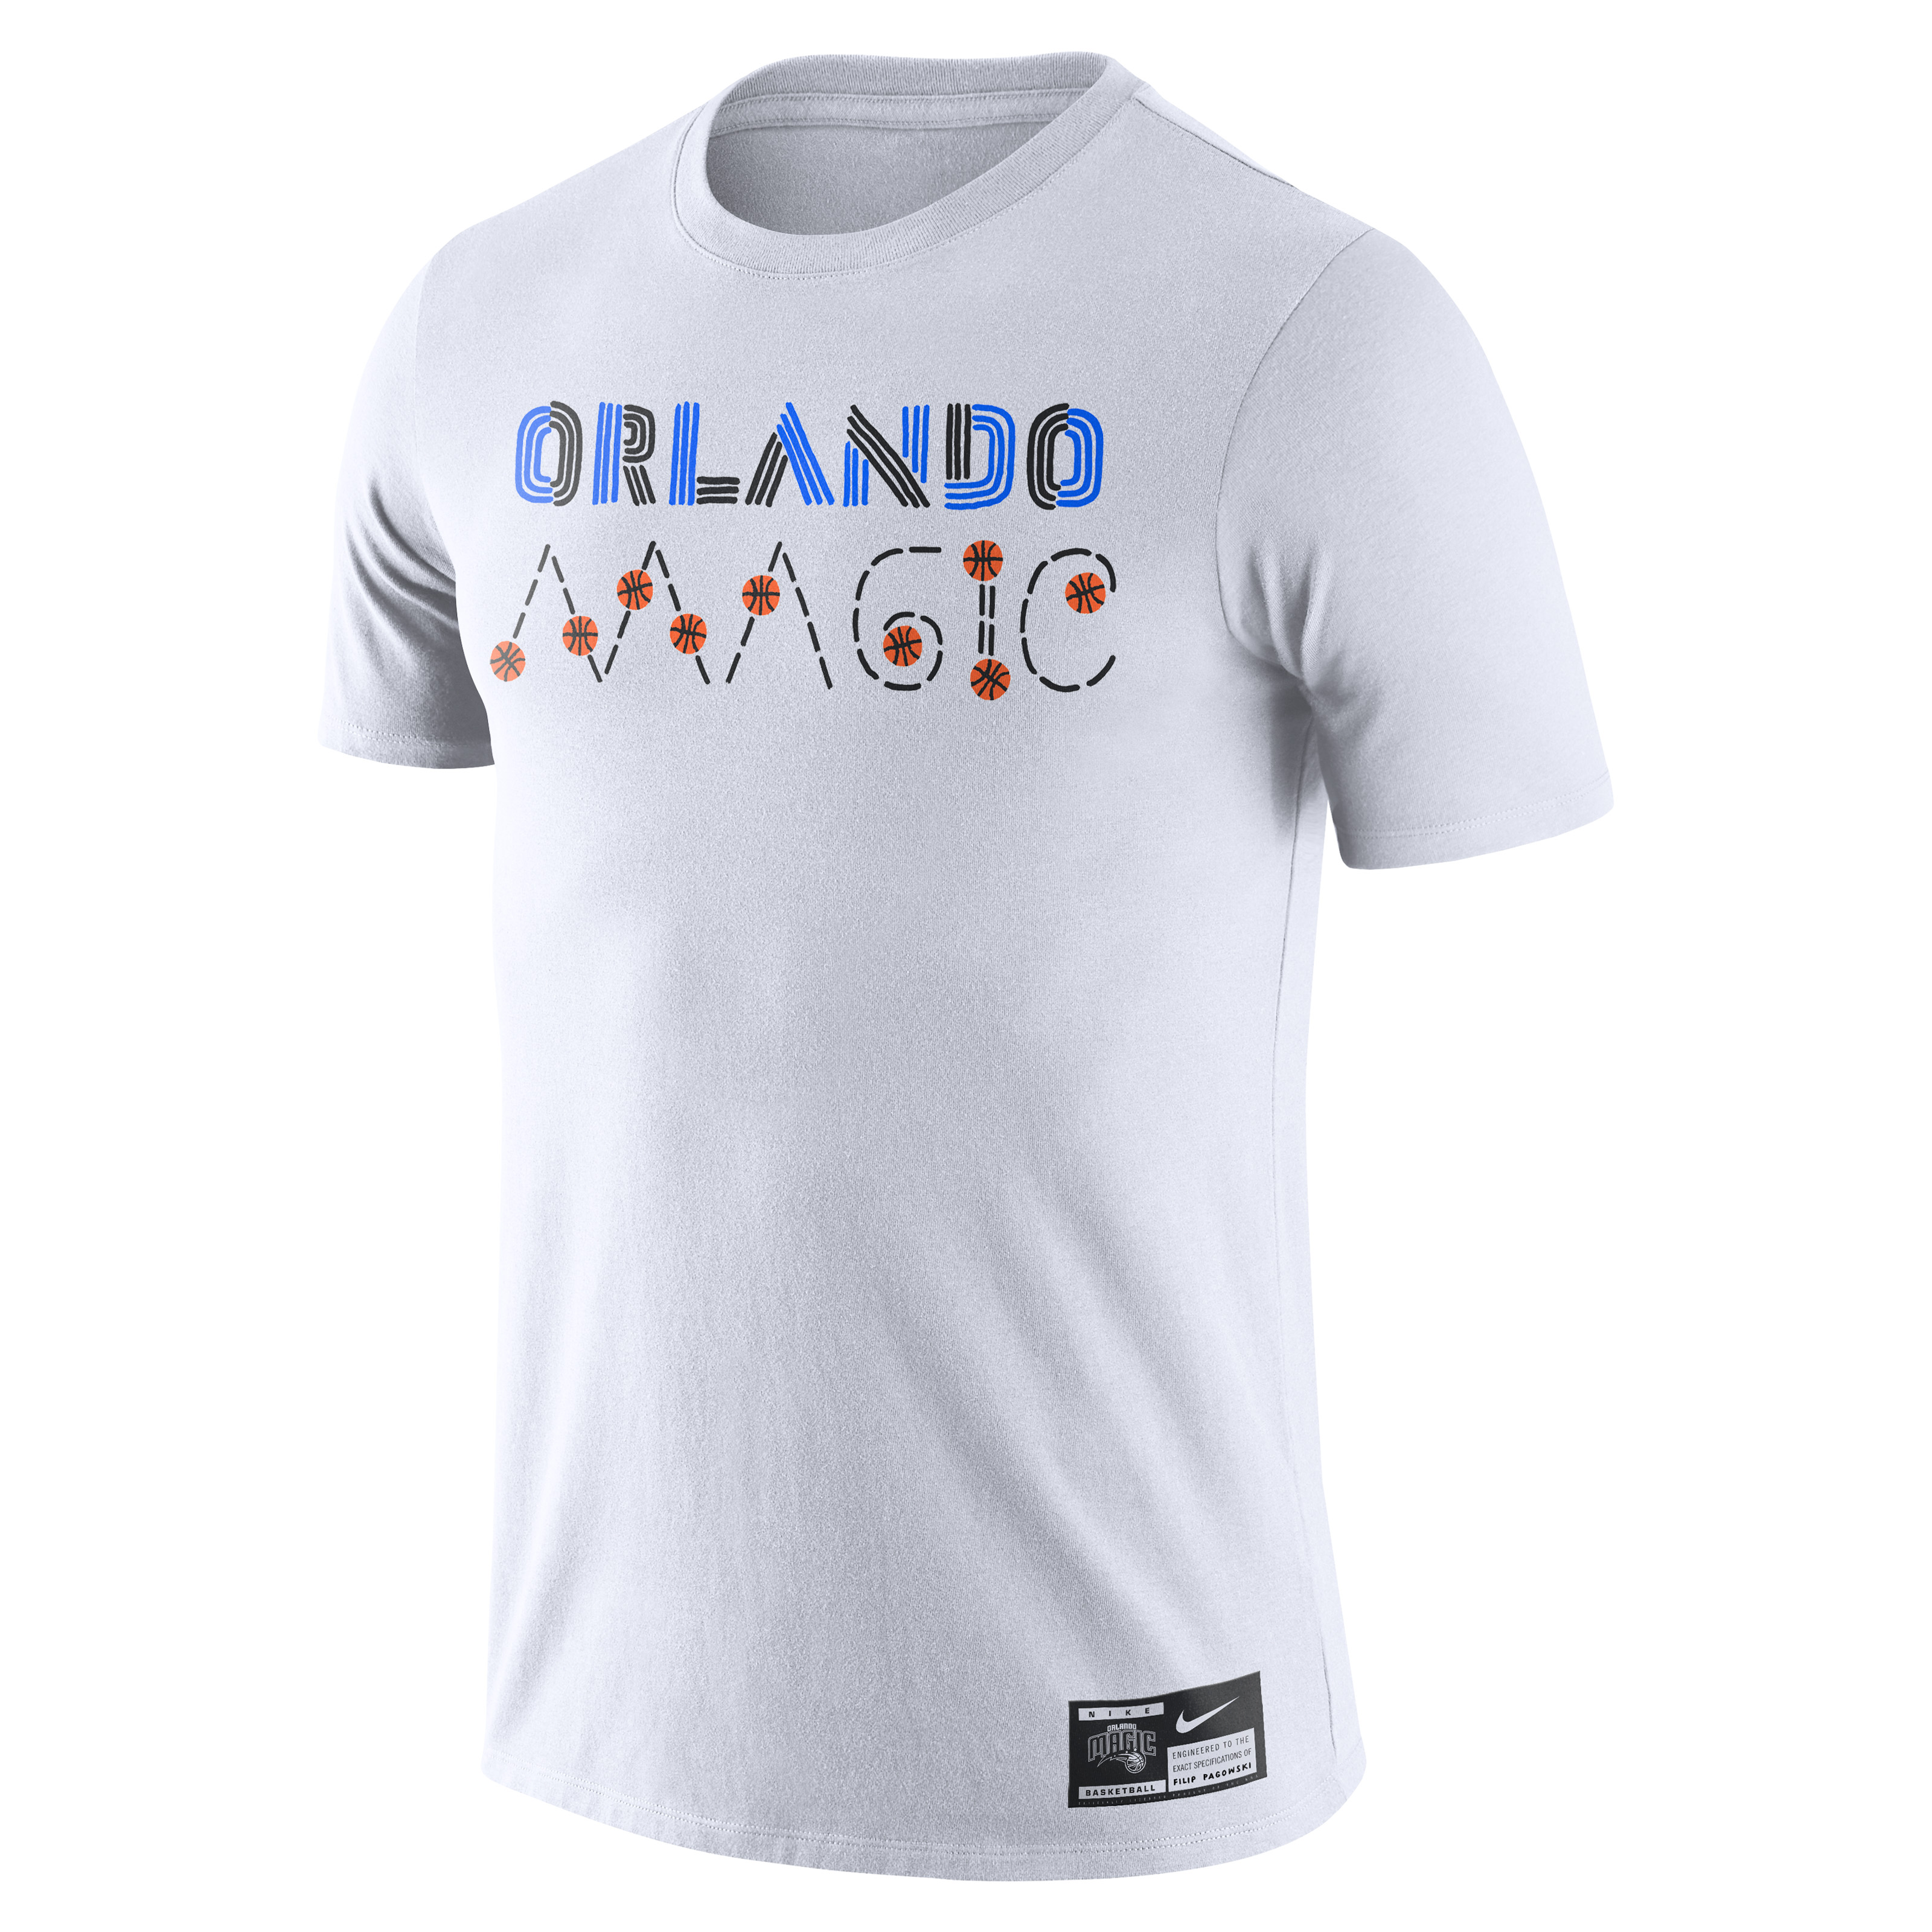 Filip Pagowski Nike T shirt &#x27;Orlando Magic&#x27;